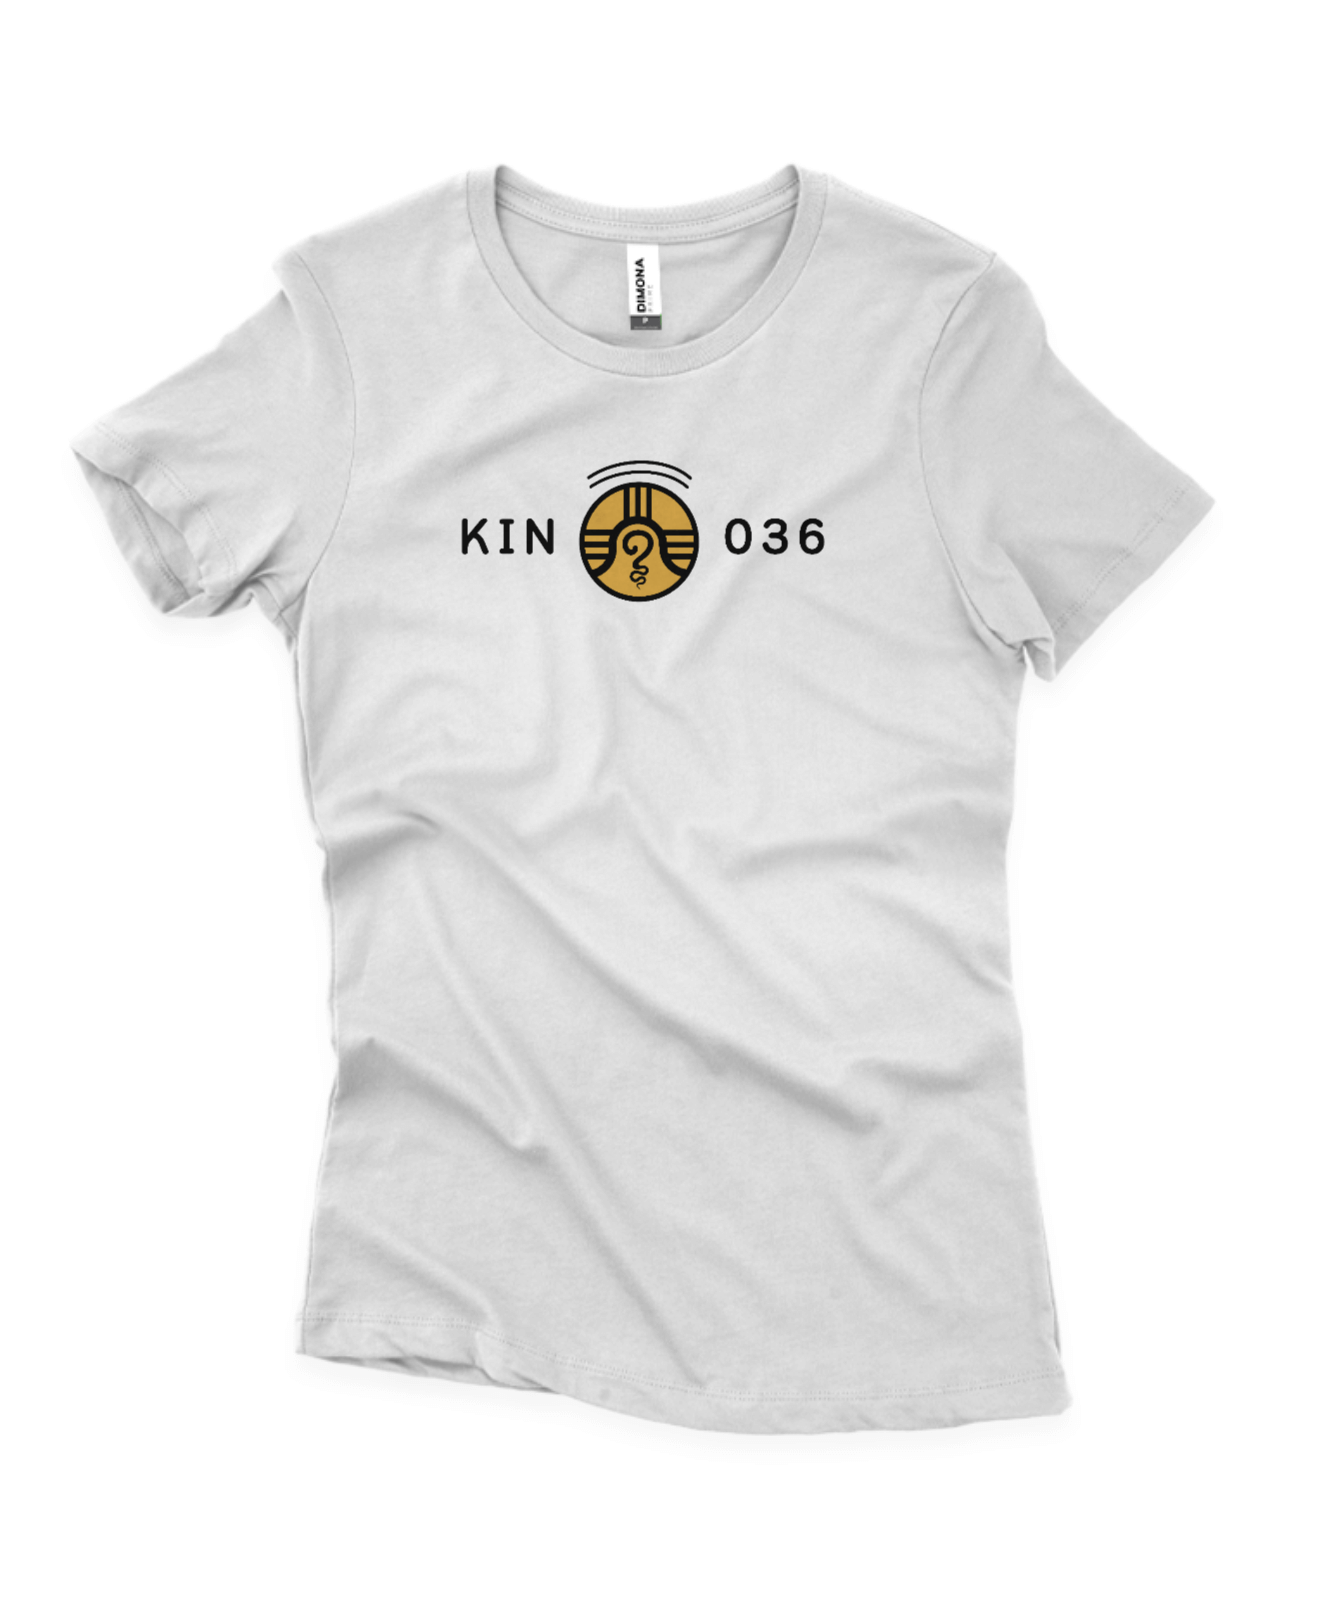 Mockup Camisa Branca - Camisa Feminina Kin 036 - Guerreiro Planetário Amarelo - Kin 36